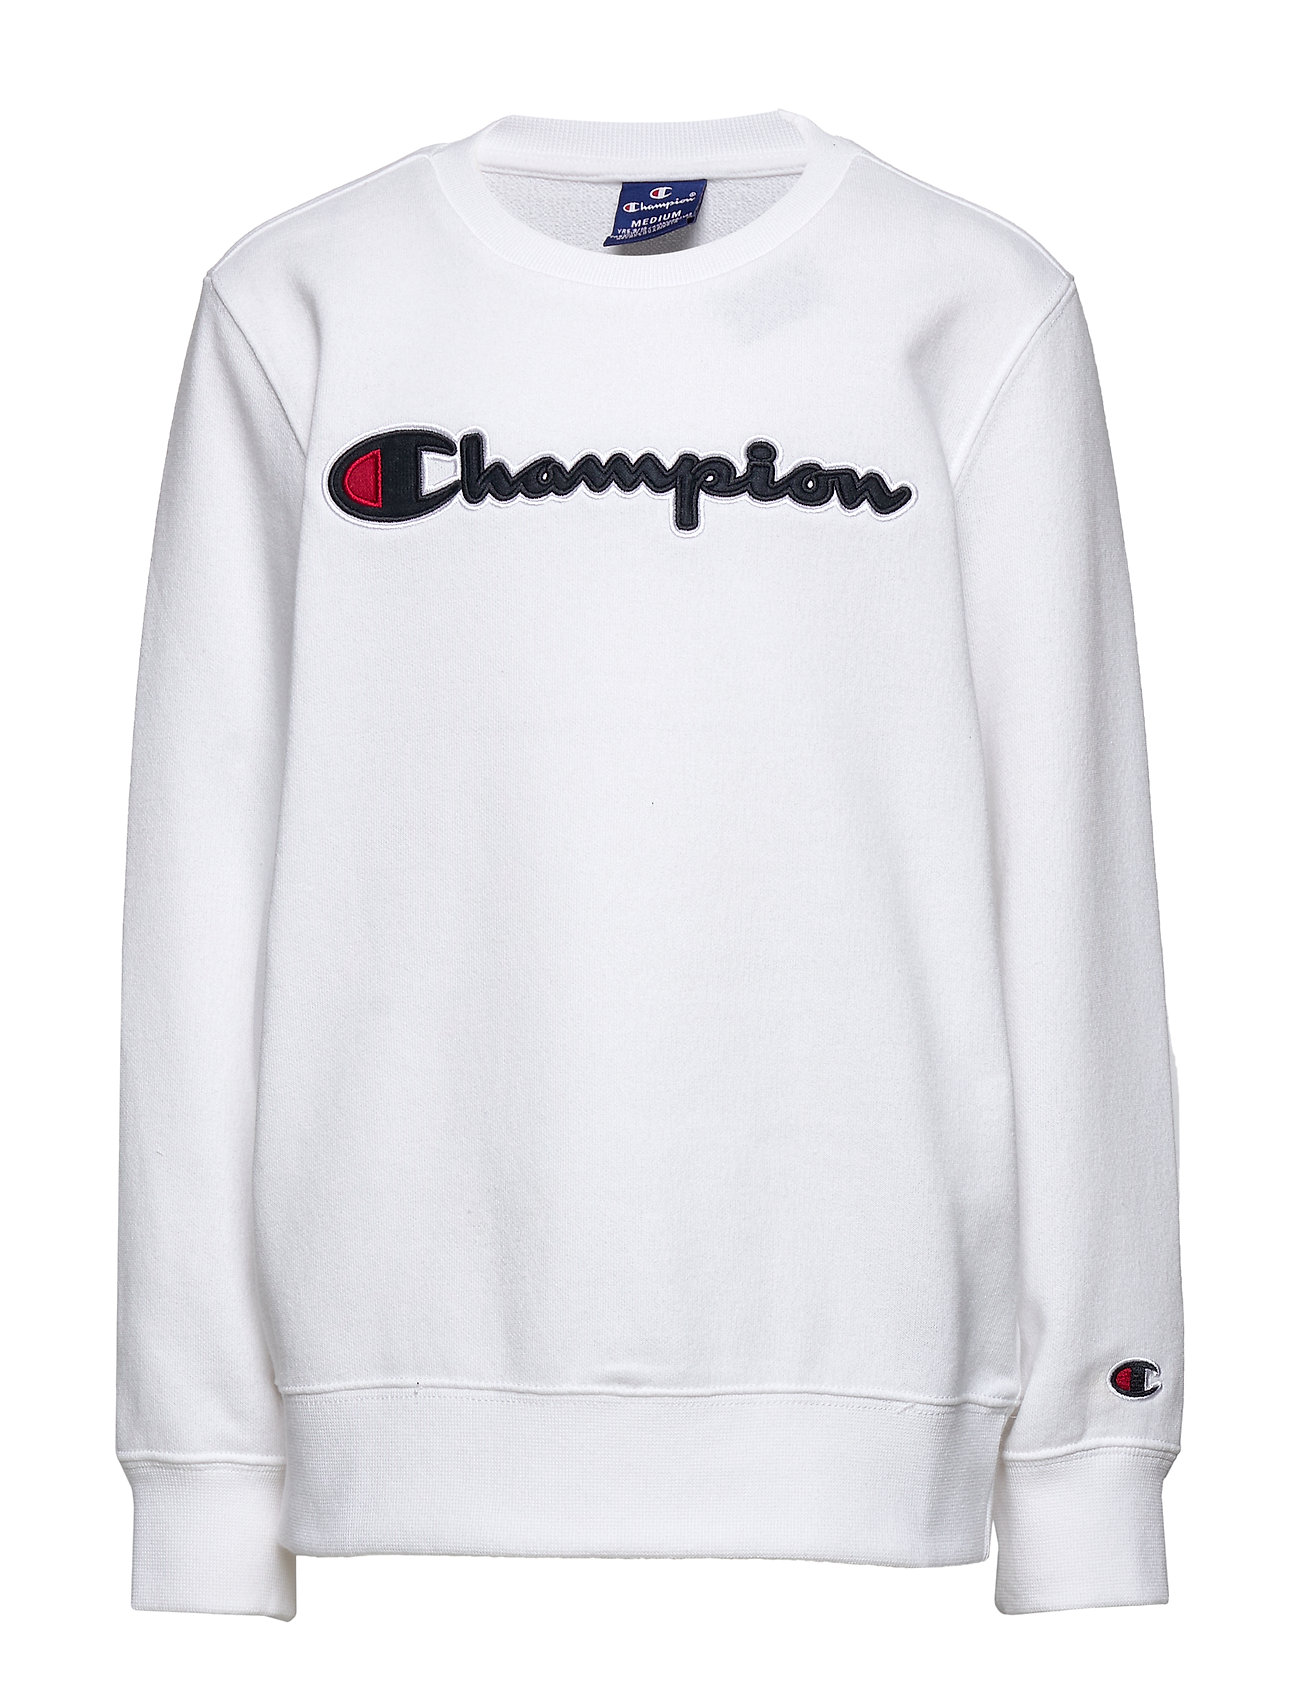 all white champion sweater